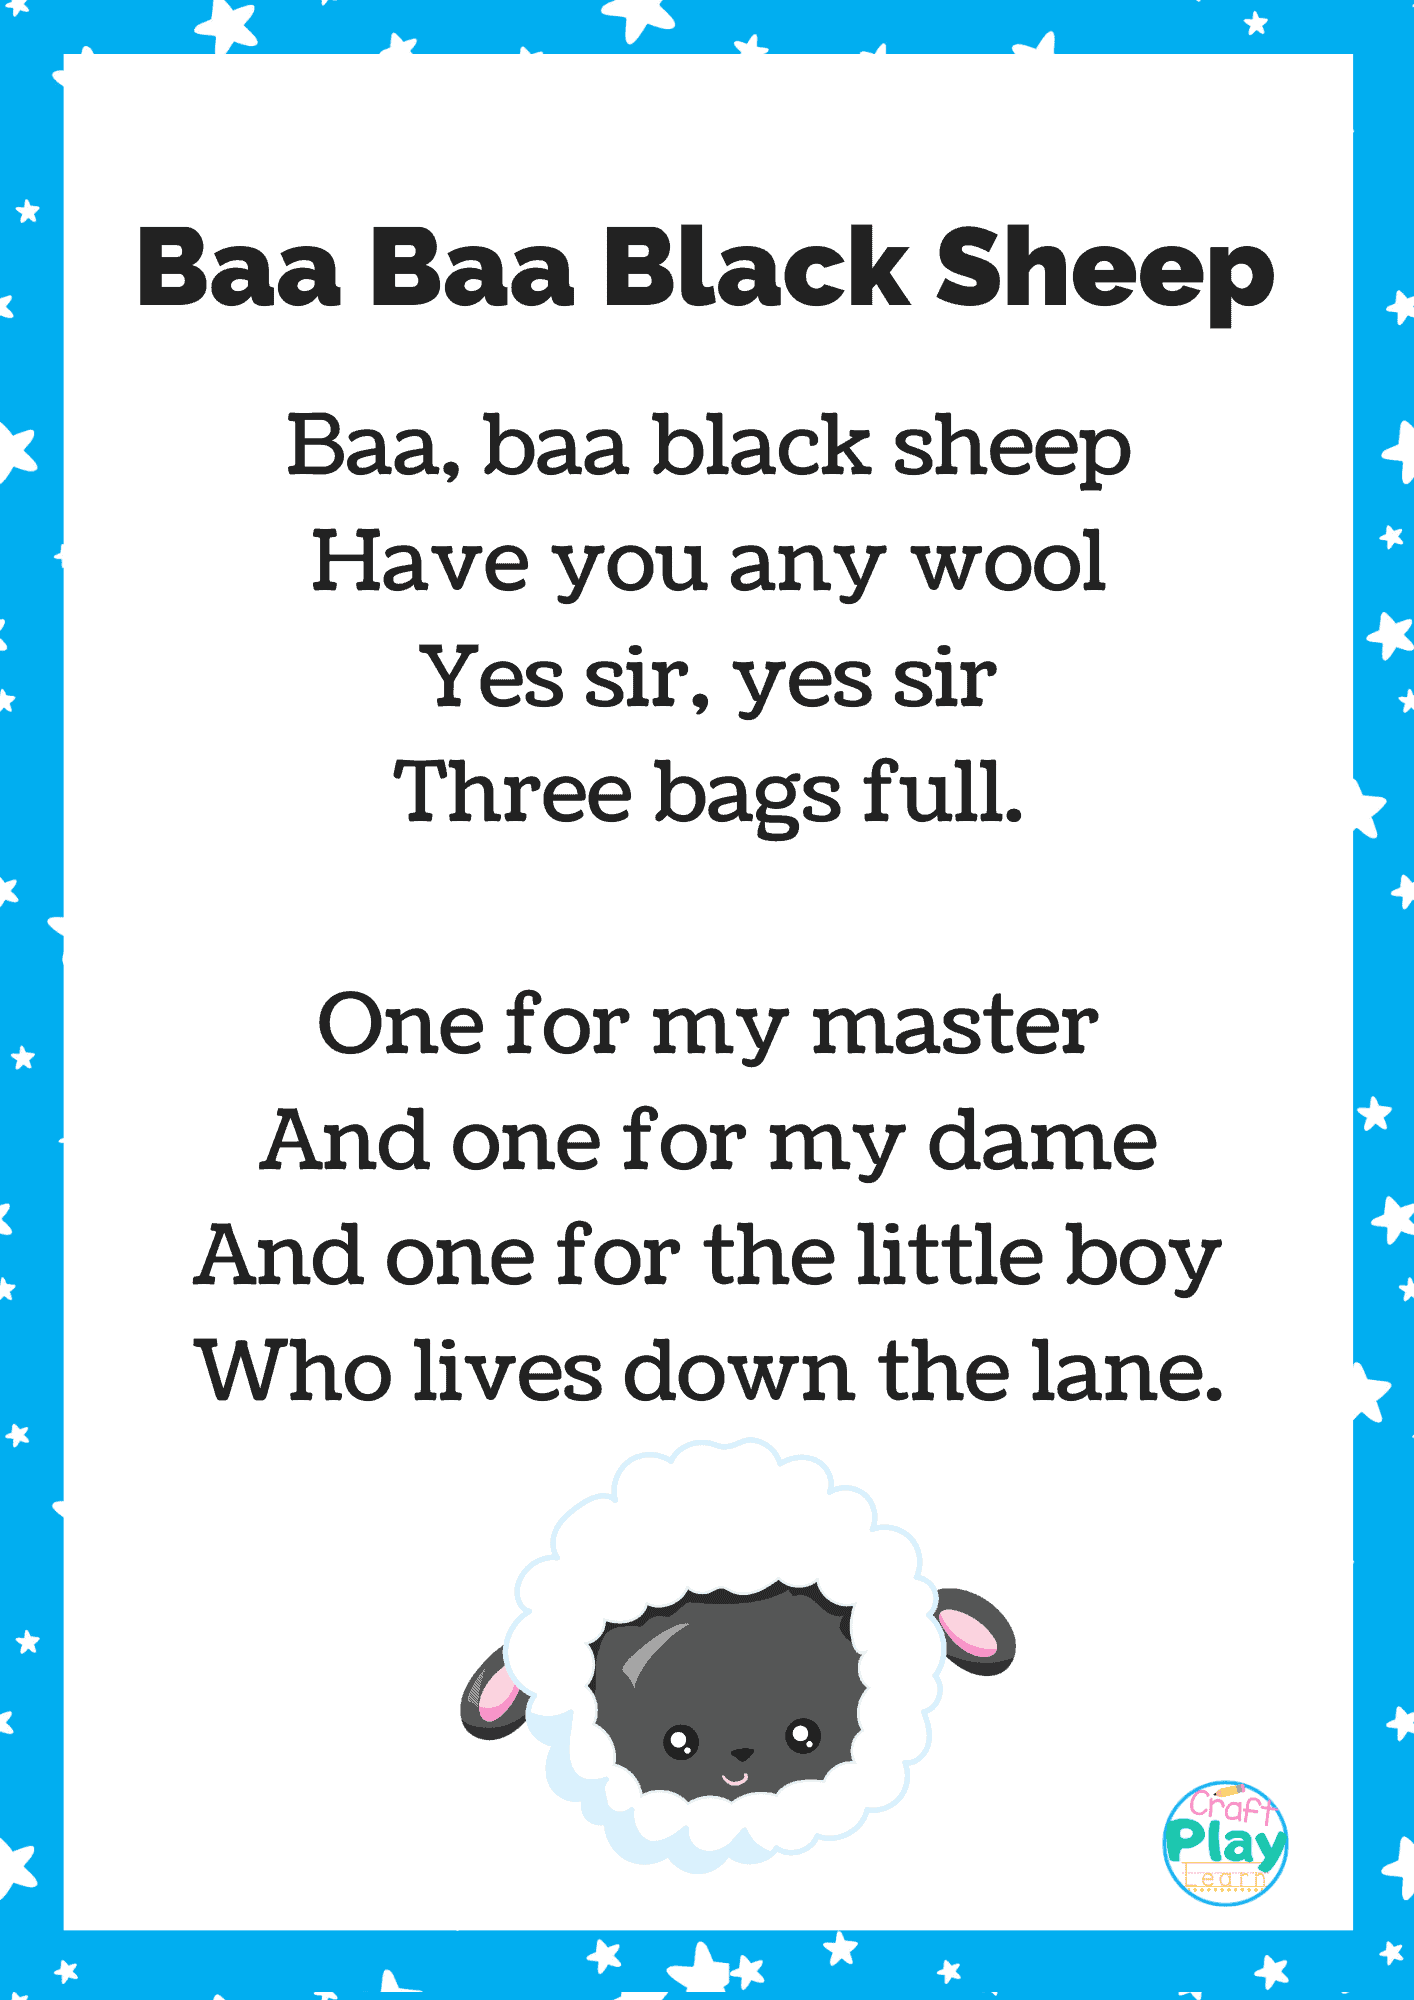 printable-baa-baa-black-sheep-lyrics-and-literacy-activities-the